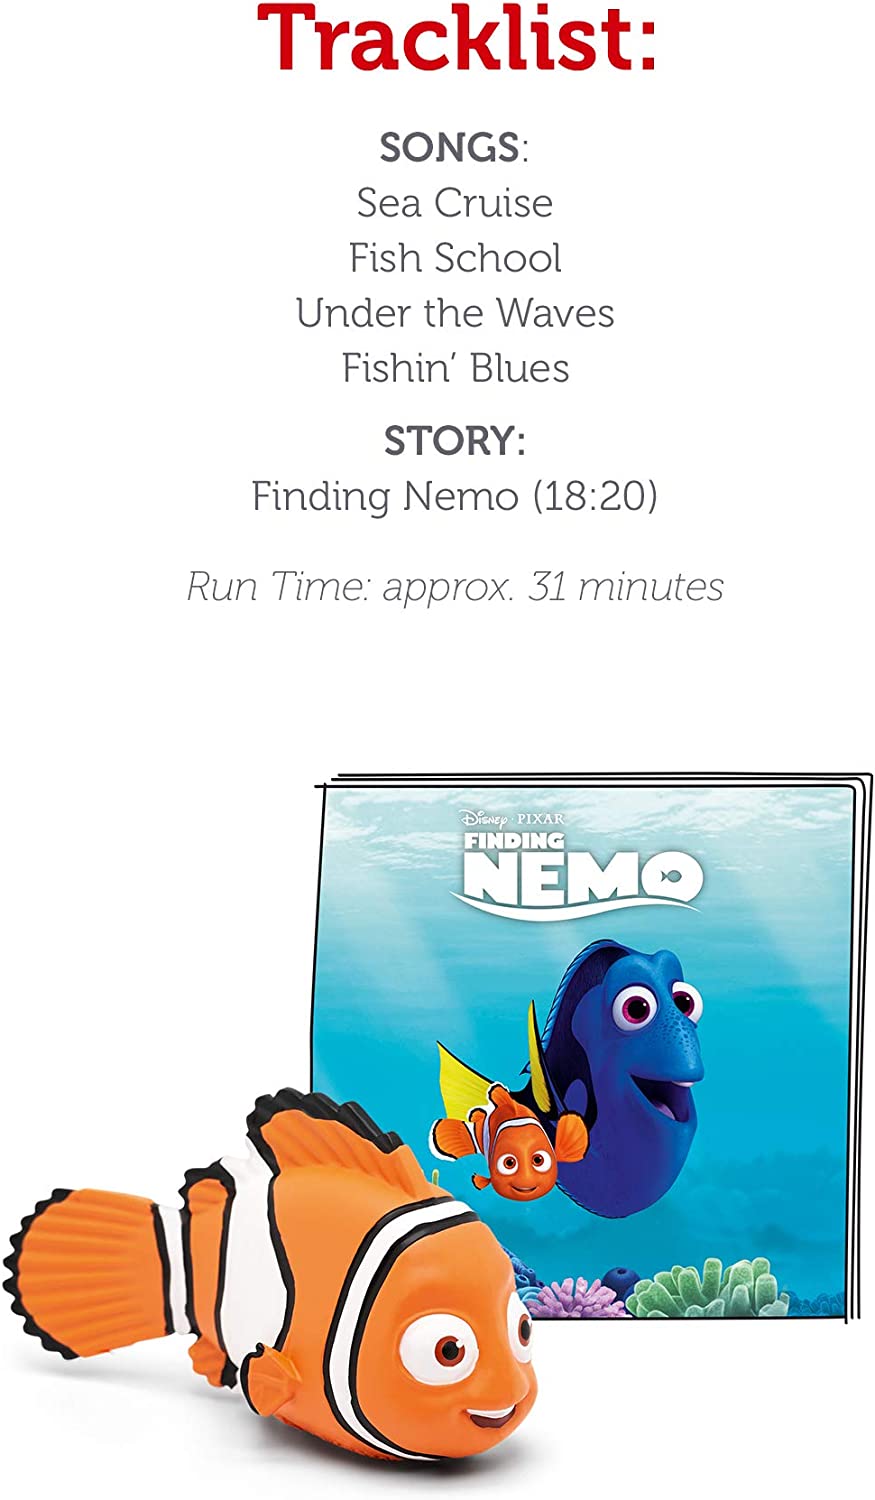 Tonies Disney Audio Play Character: Nemo